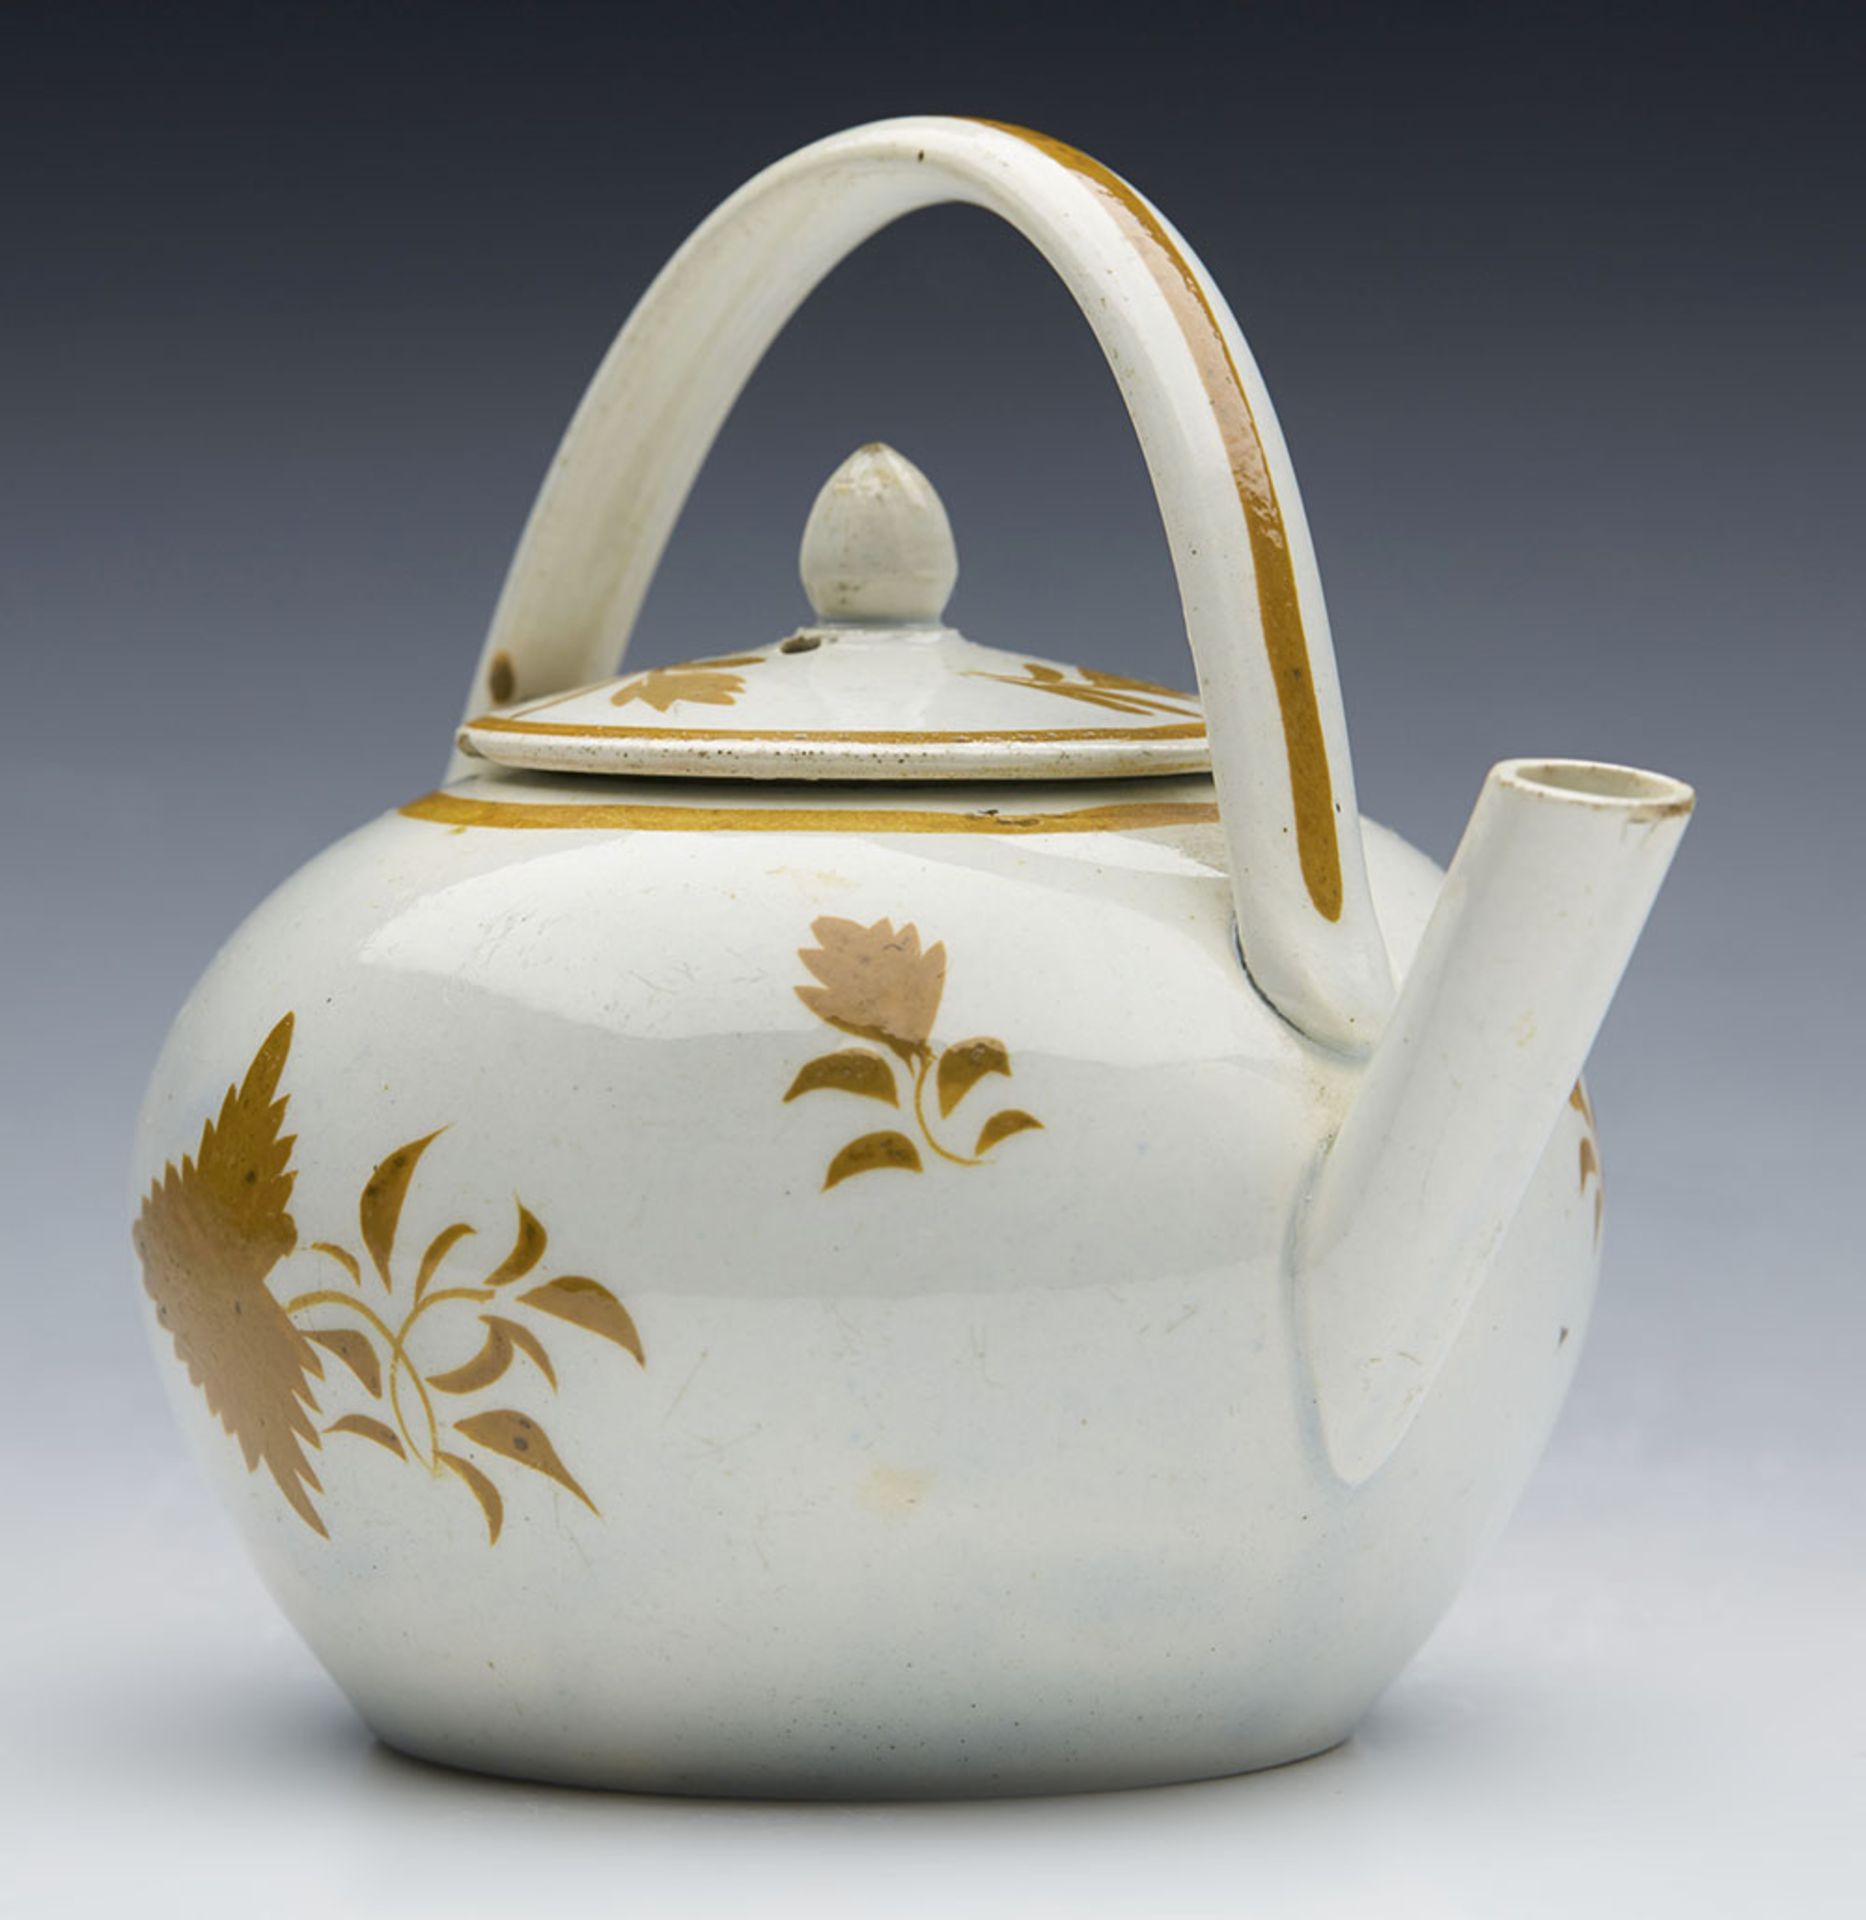 Aantique Pearlware Kettle Shaped Lidedd Miniature Teapot 18/19Th C. - Image 4 of 9